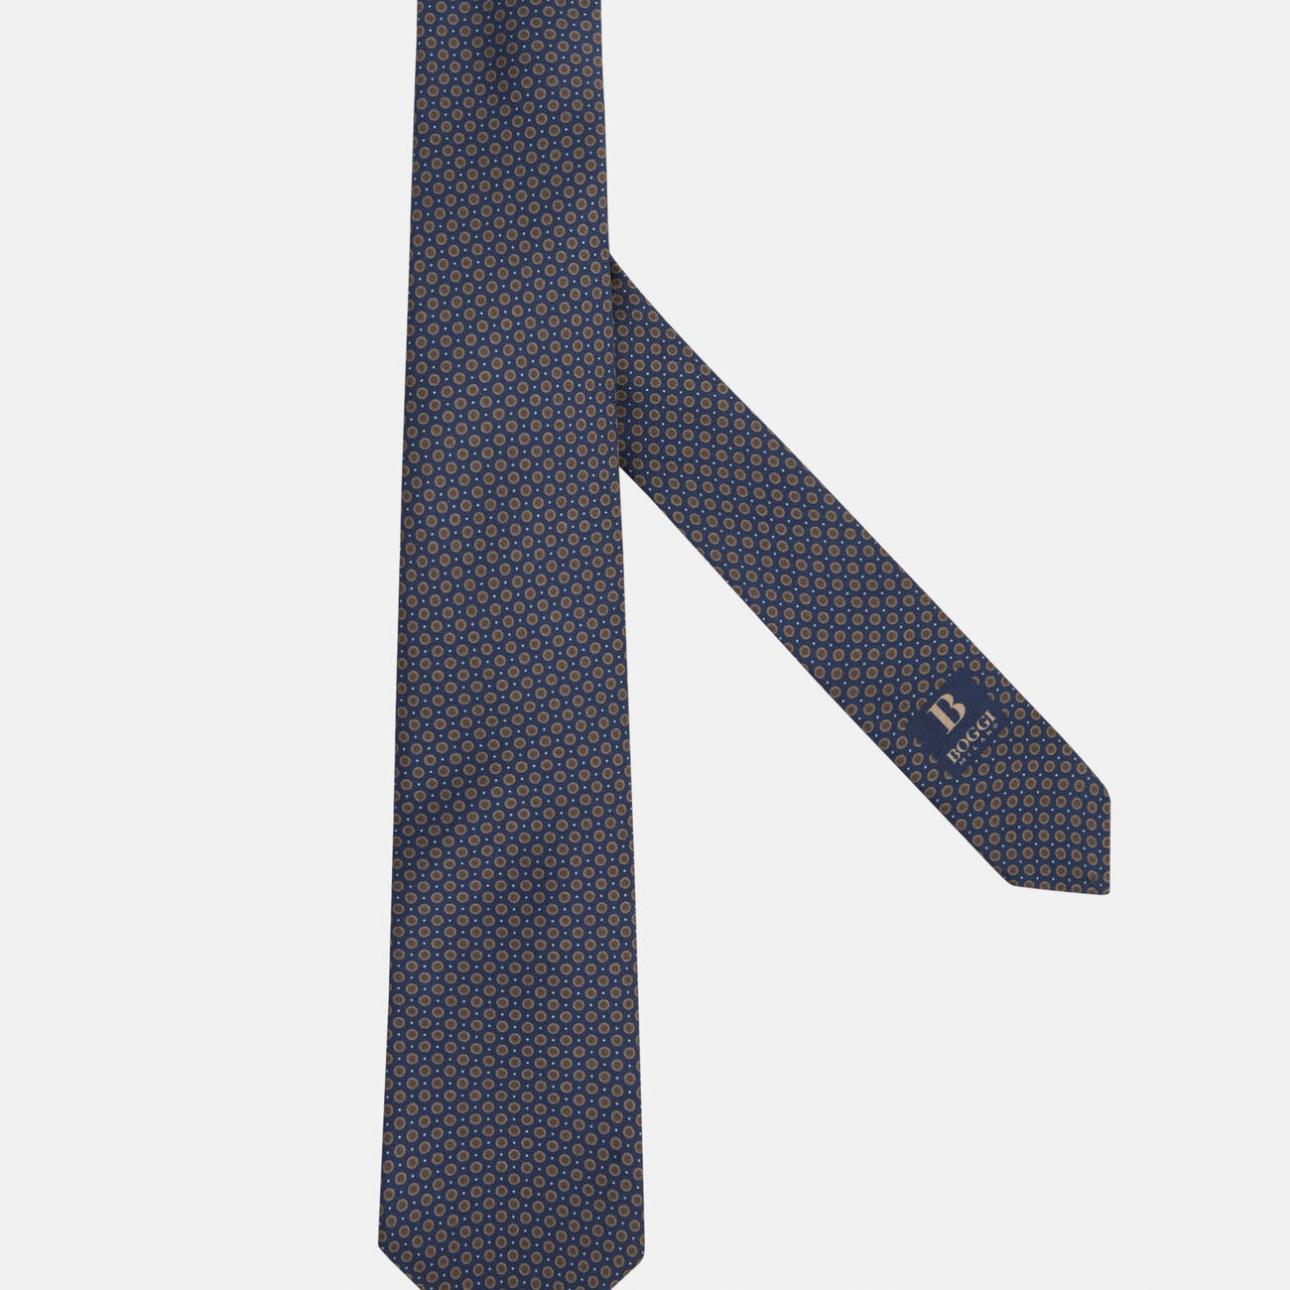 Cravatta Pois In Seta Boggi Uomo Accessori Cravatte e accessori Cravatte 